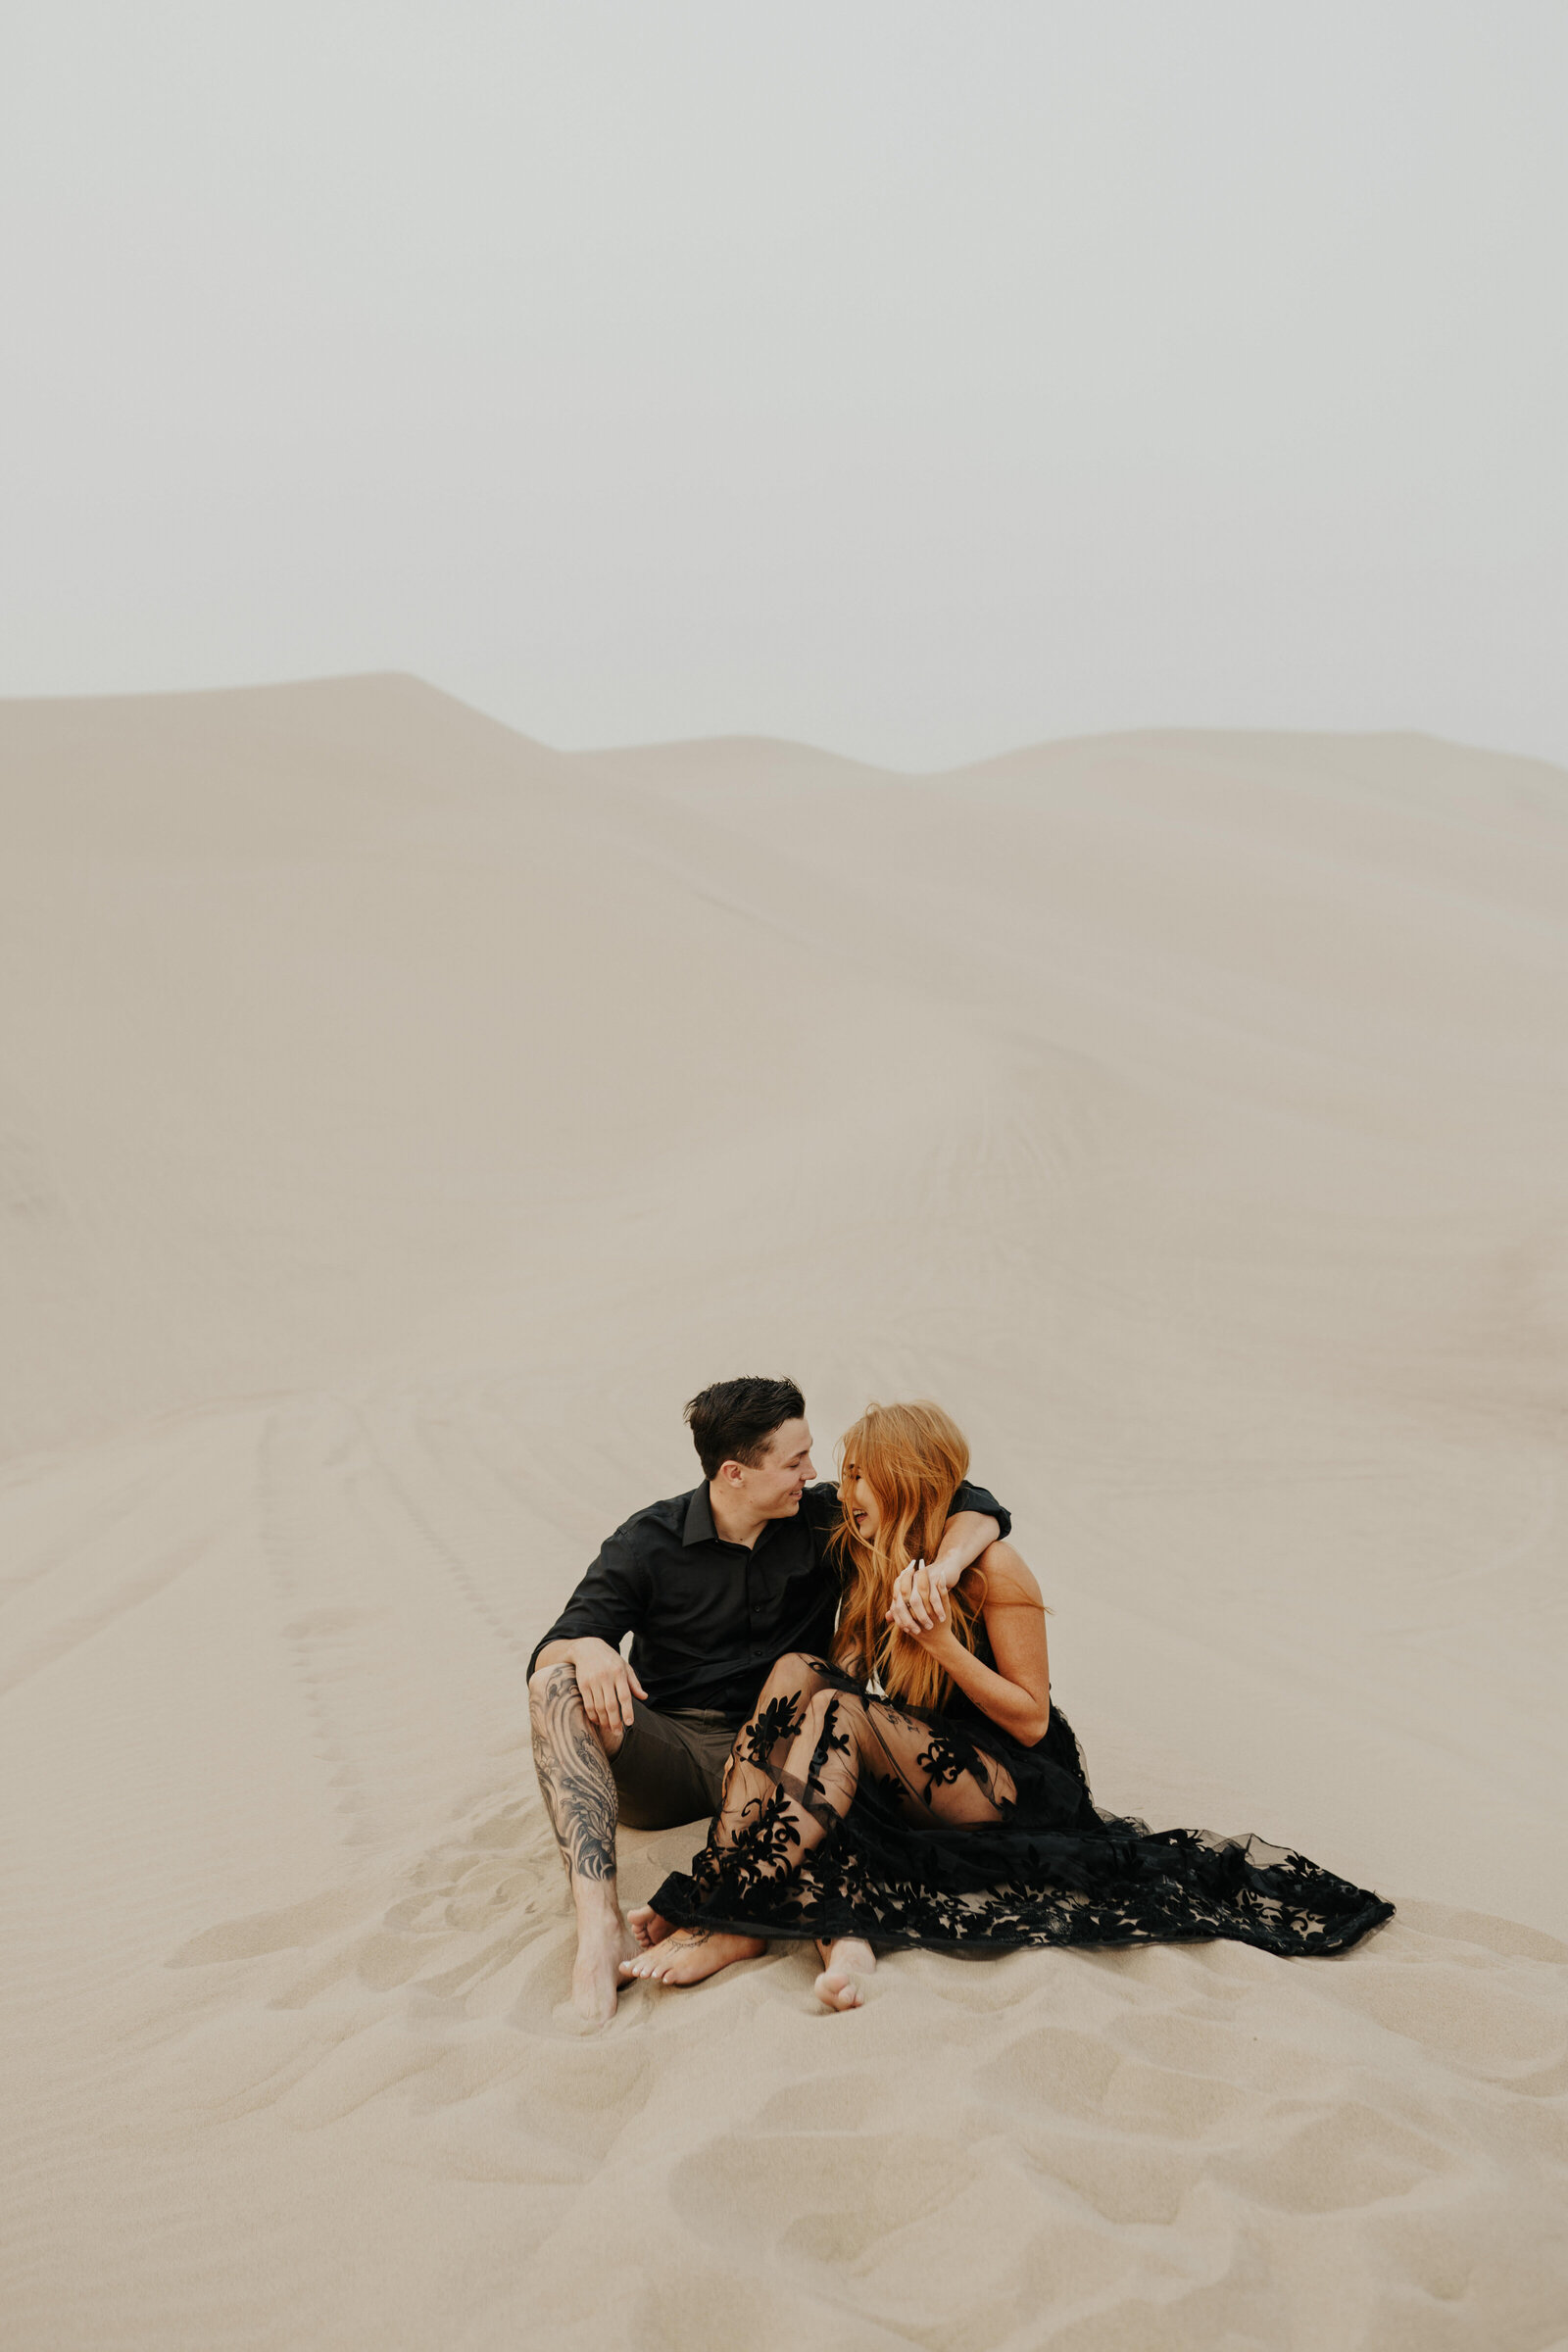 Sand Dunes Couples Photos - Raquel King Photography14